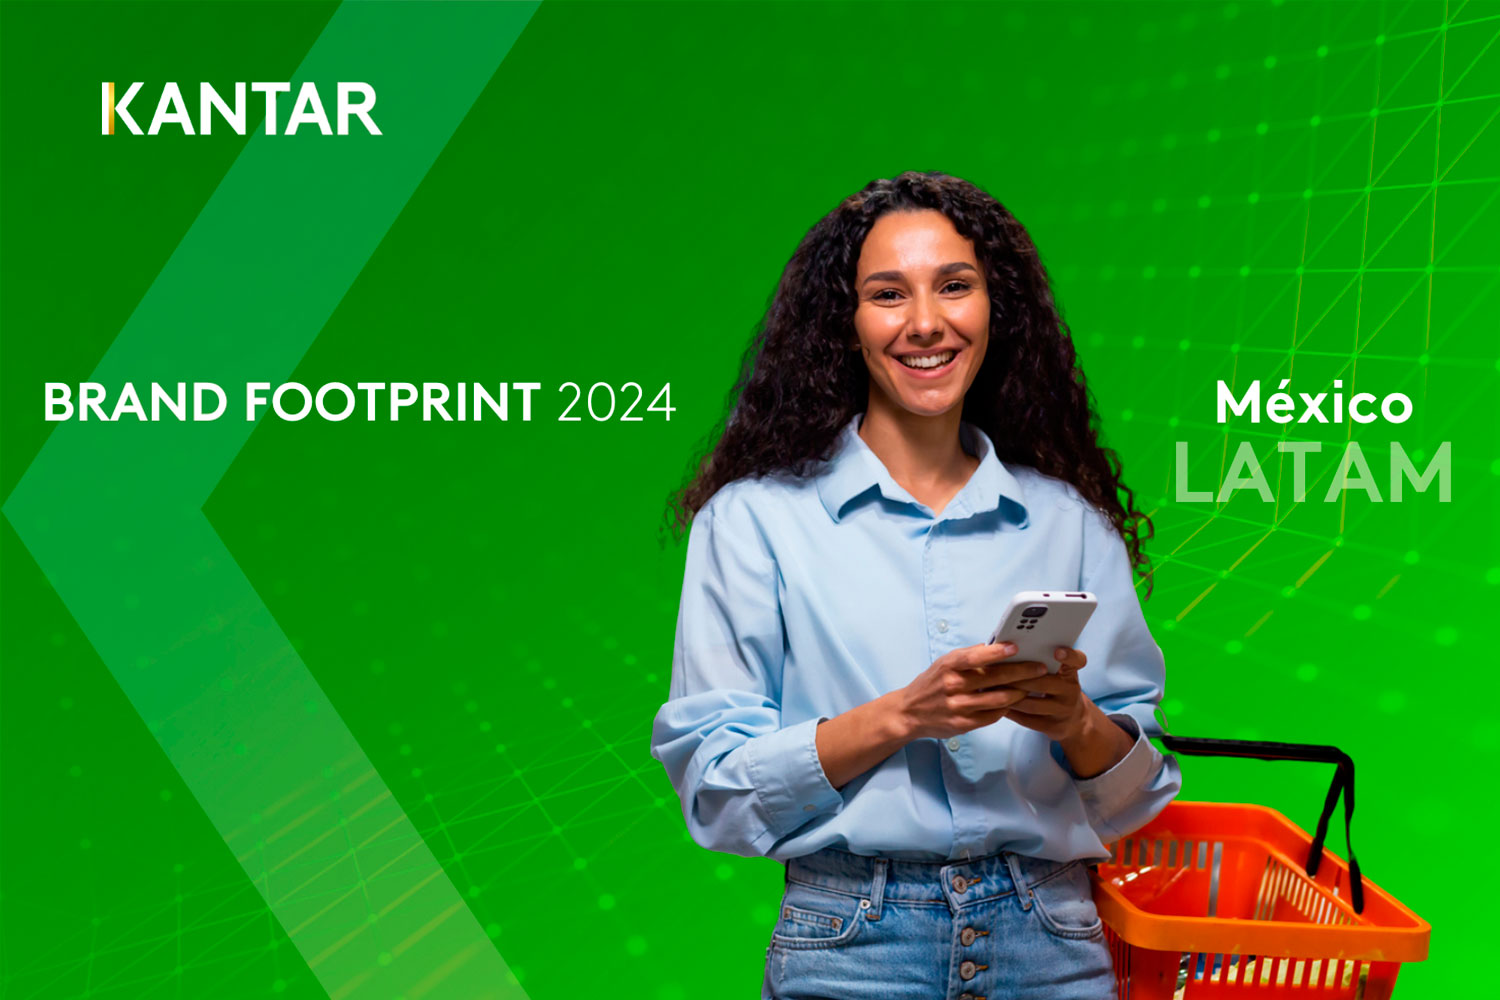 Brand Footprint 2024 - Mexico